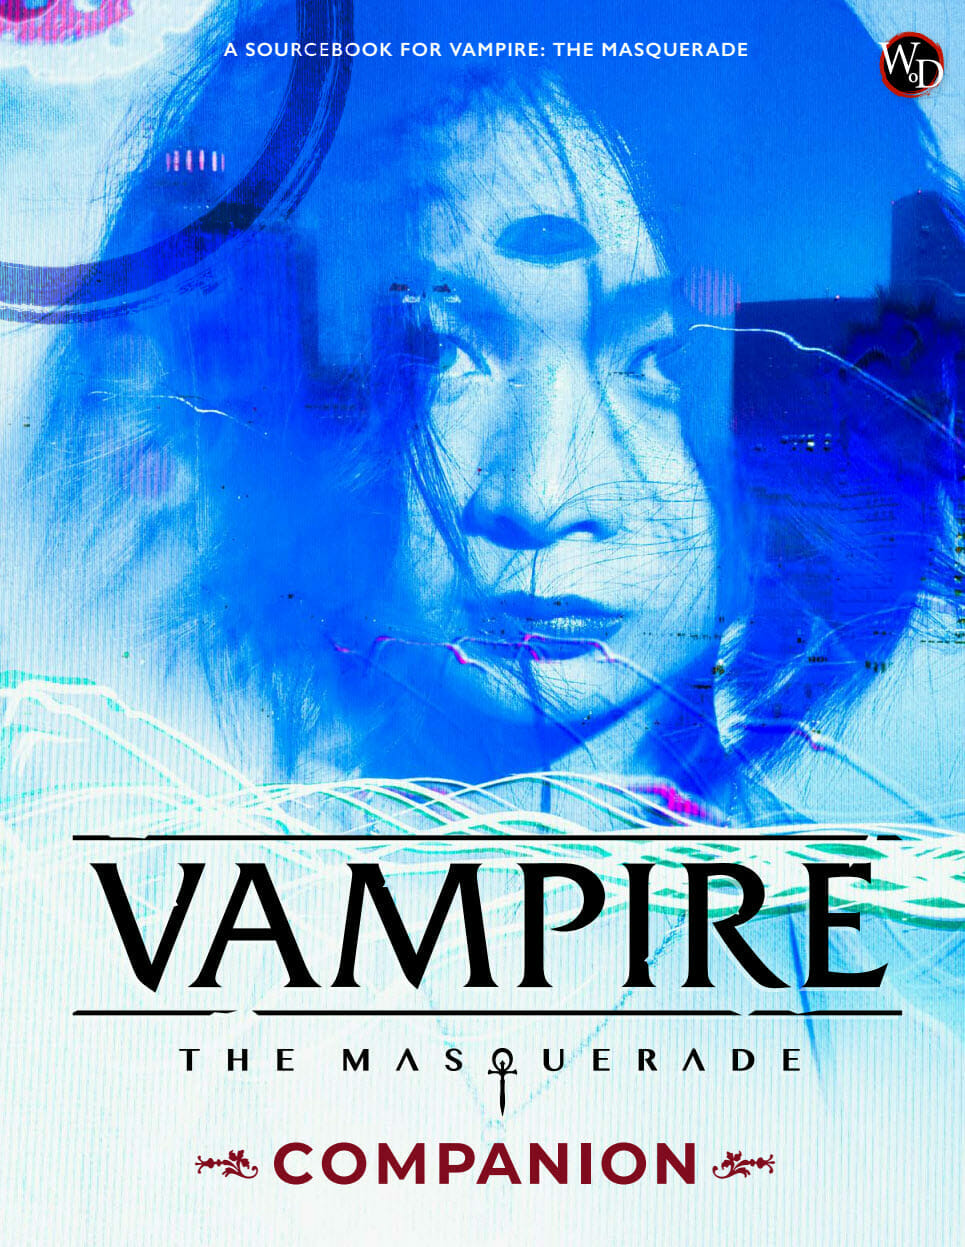 vampire-the-masquerade-companion.jpg